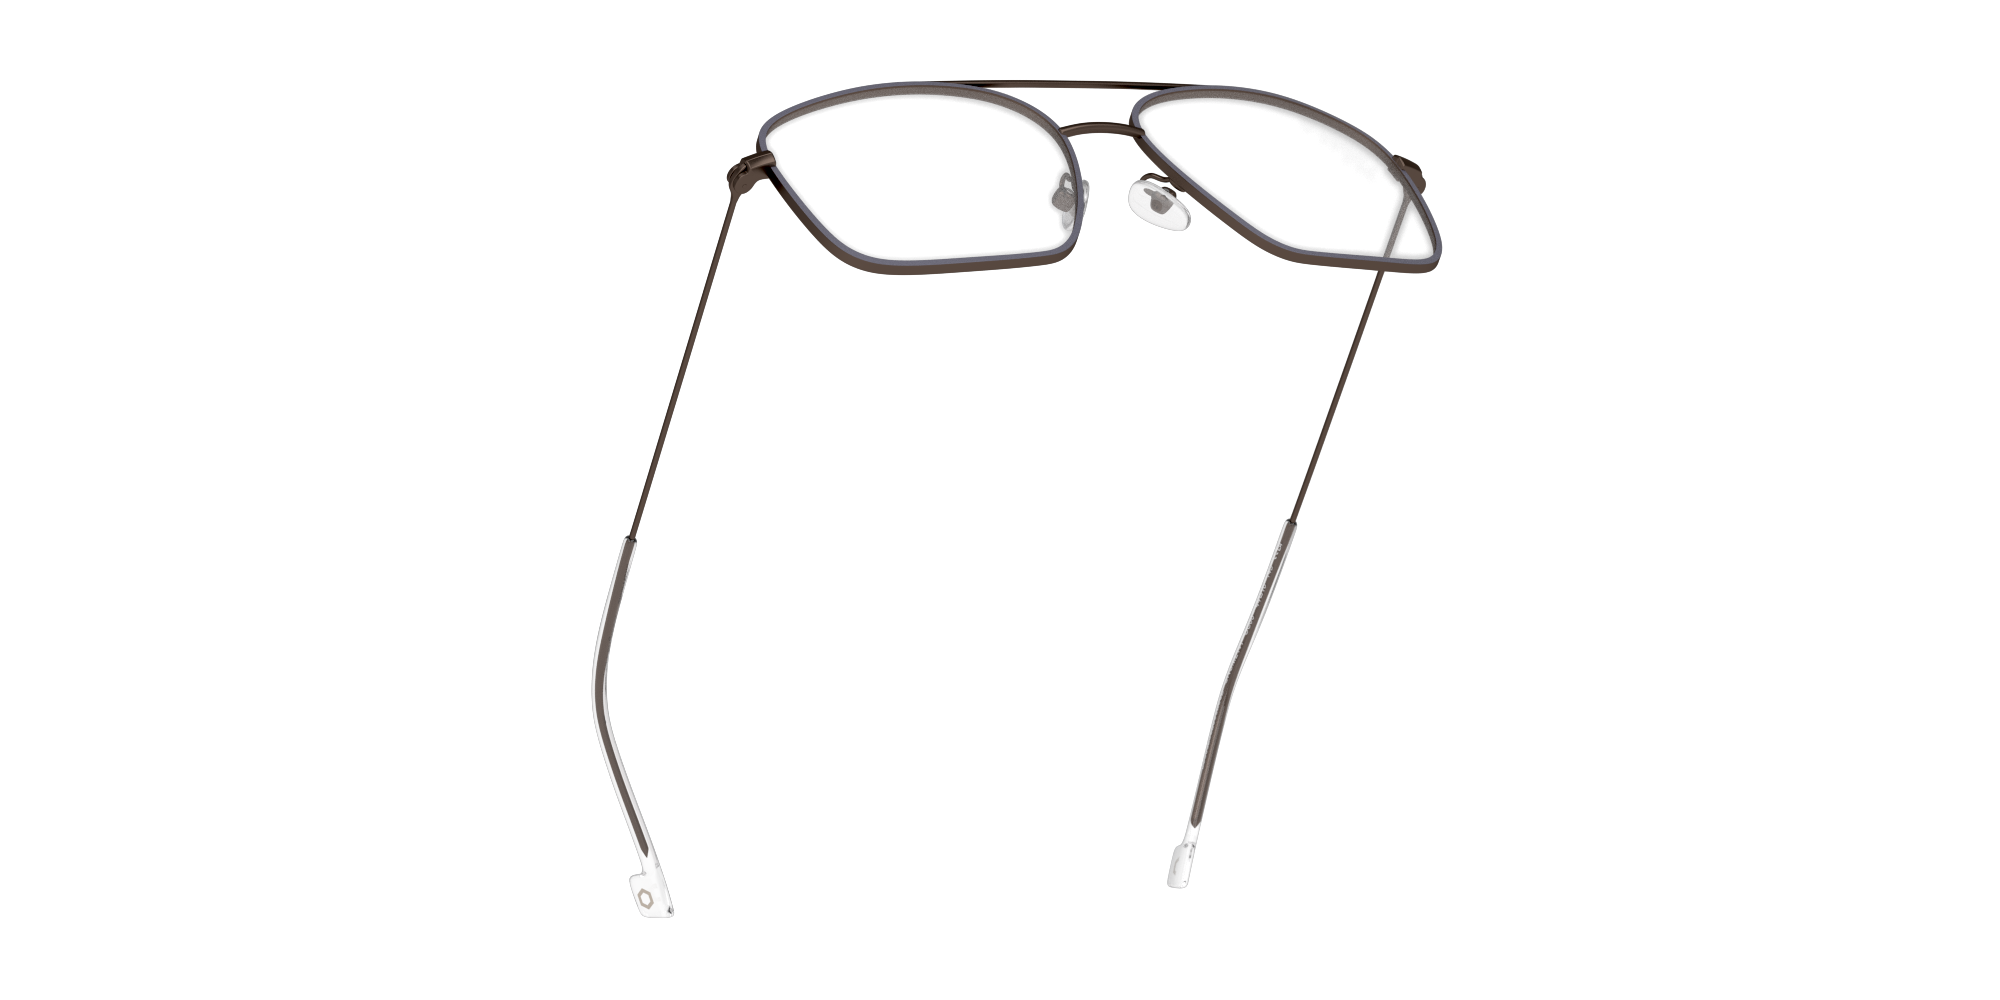 Bottom_Up Unofficial UNOM0314 (LG00) Glasses Transparent / Blue